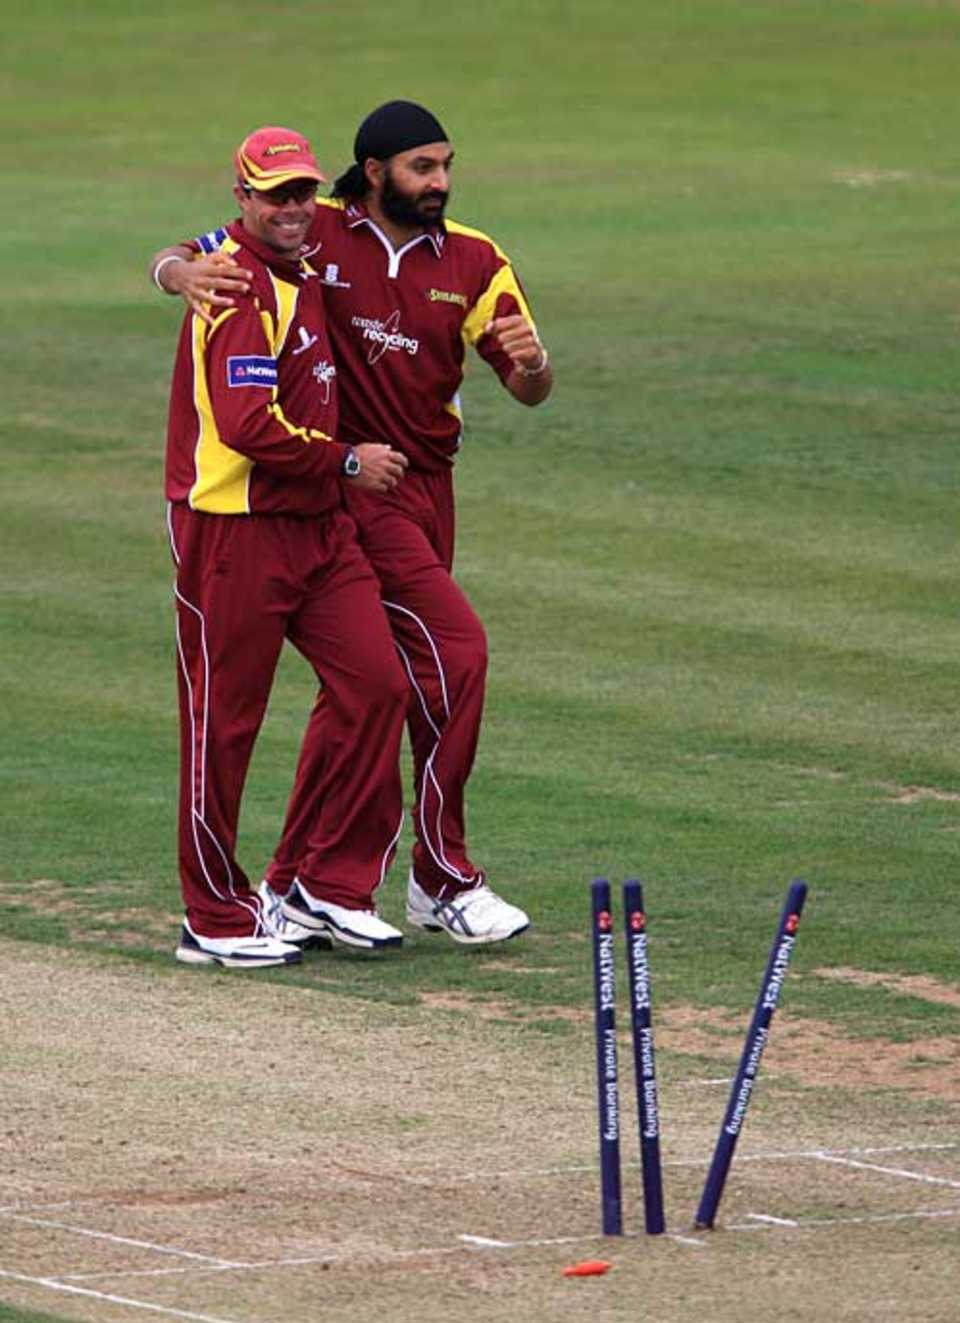 Monty Panesar enjoyed a rare wicket when he removed Matthew Spriegel